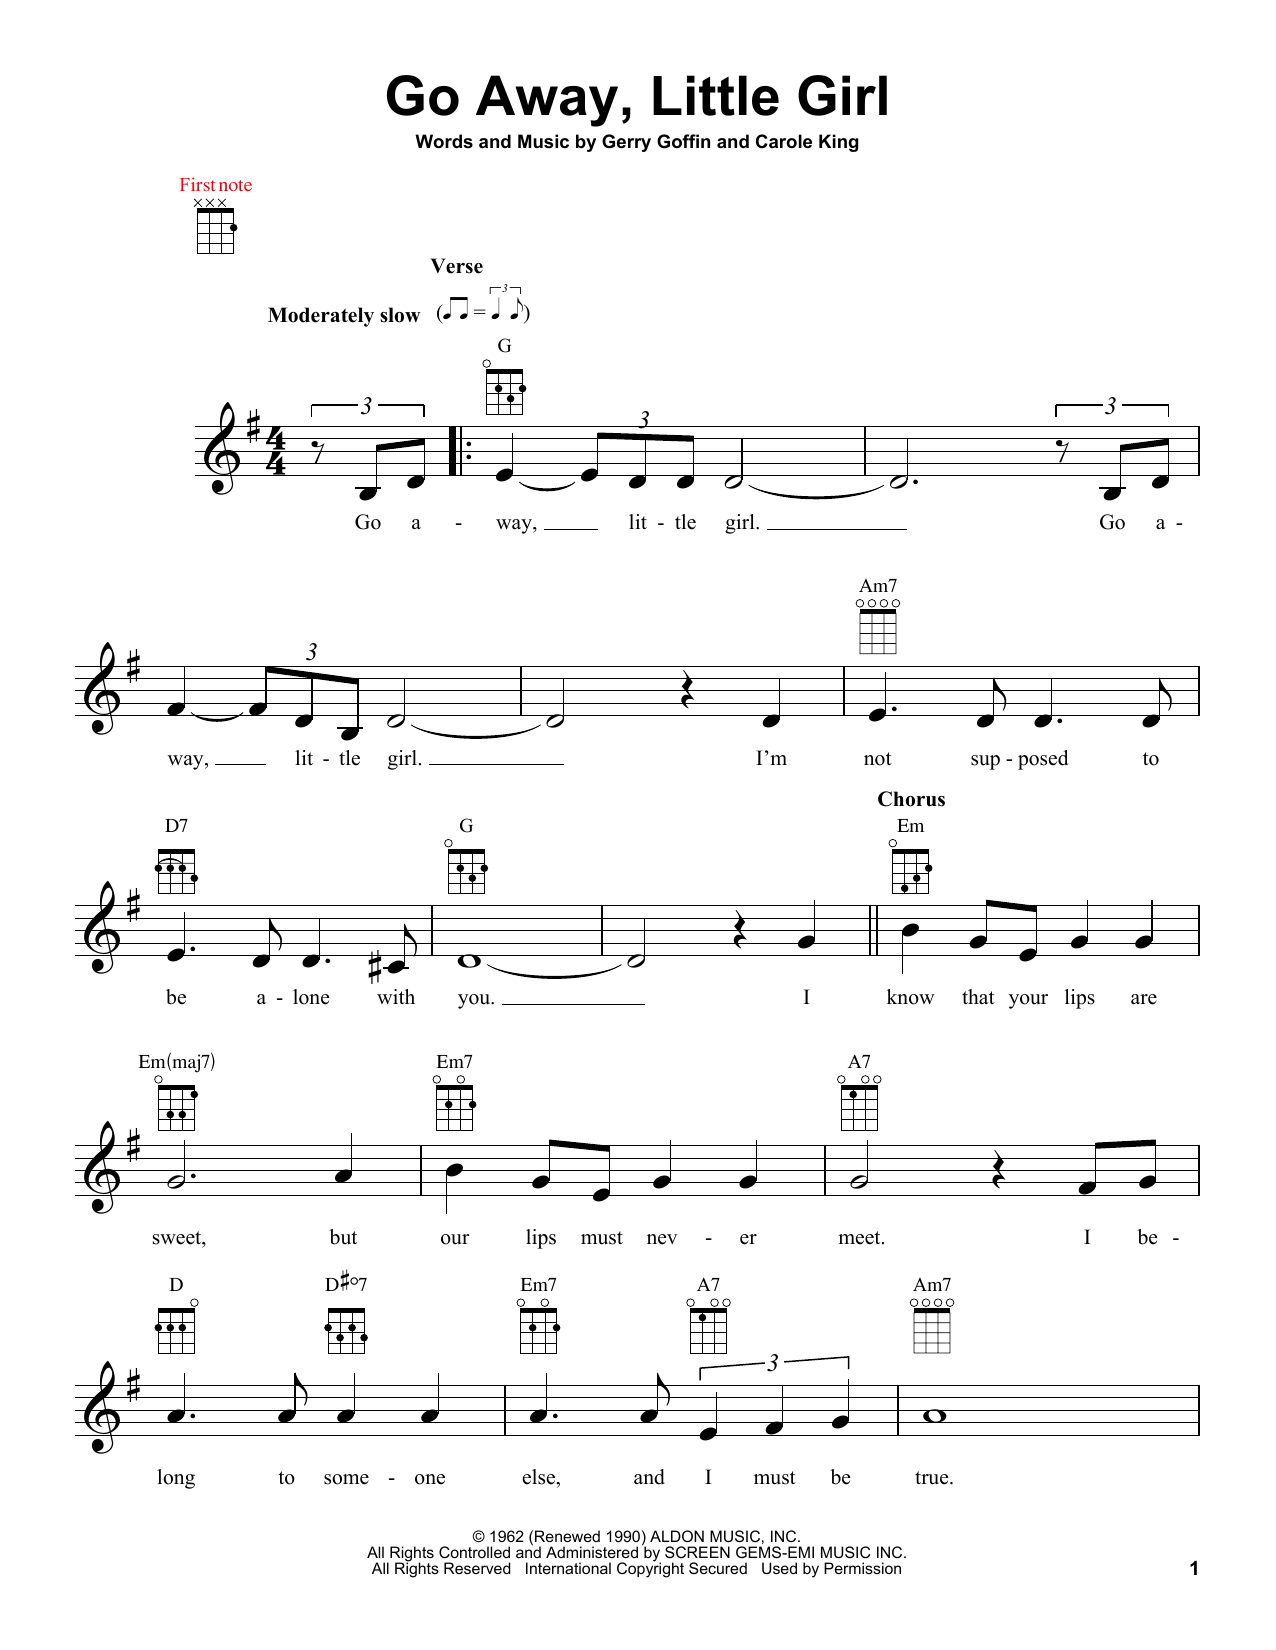 Donny Osmond Go Away, Little Girl Sheet Music Notes & Chords for Trombone - Download or Print PDF